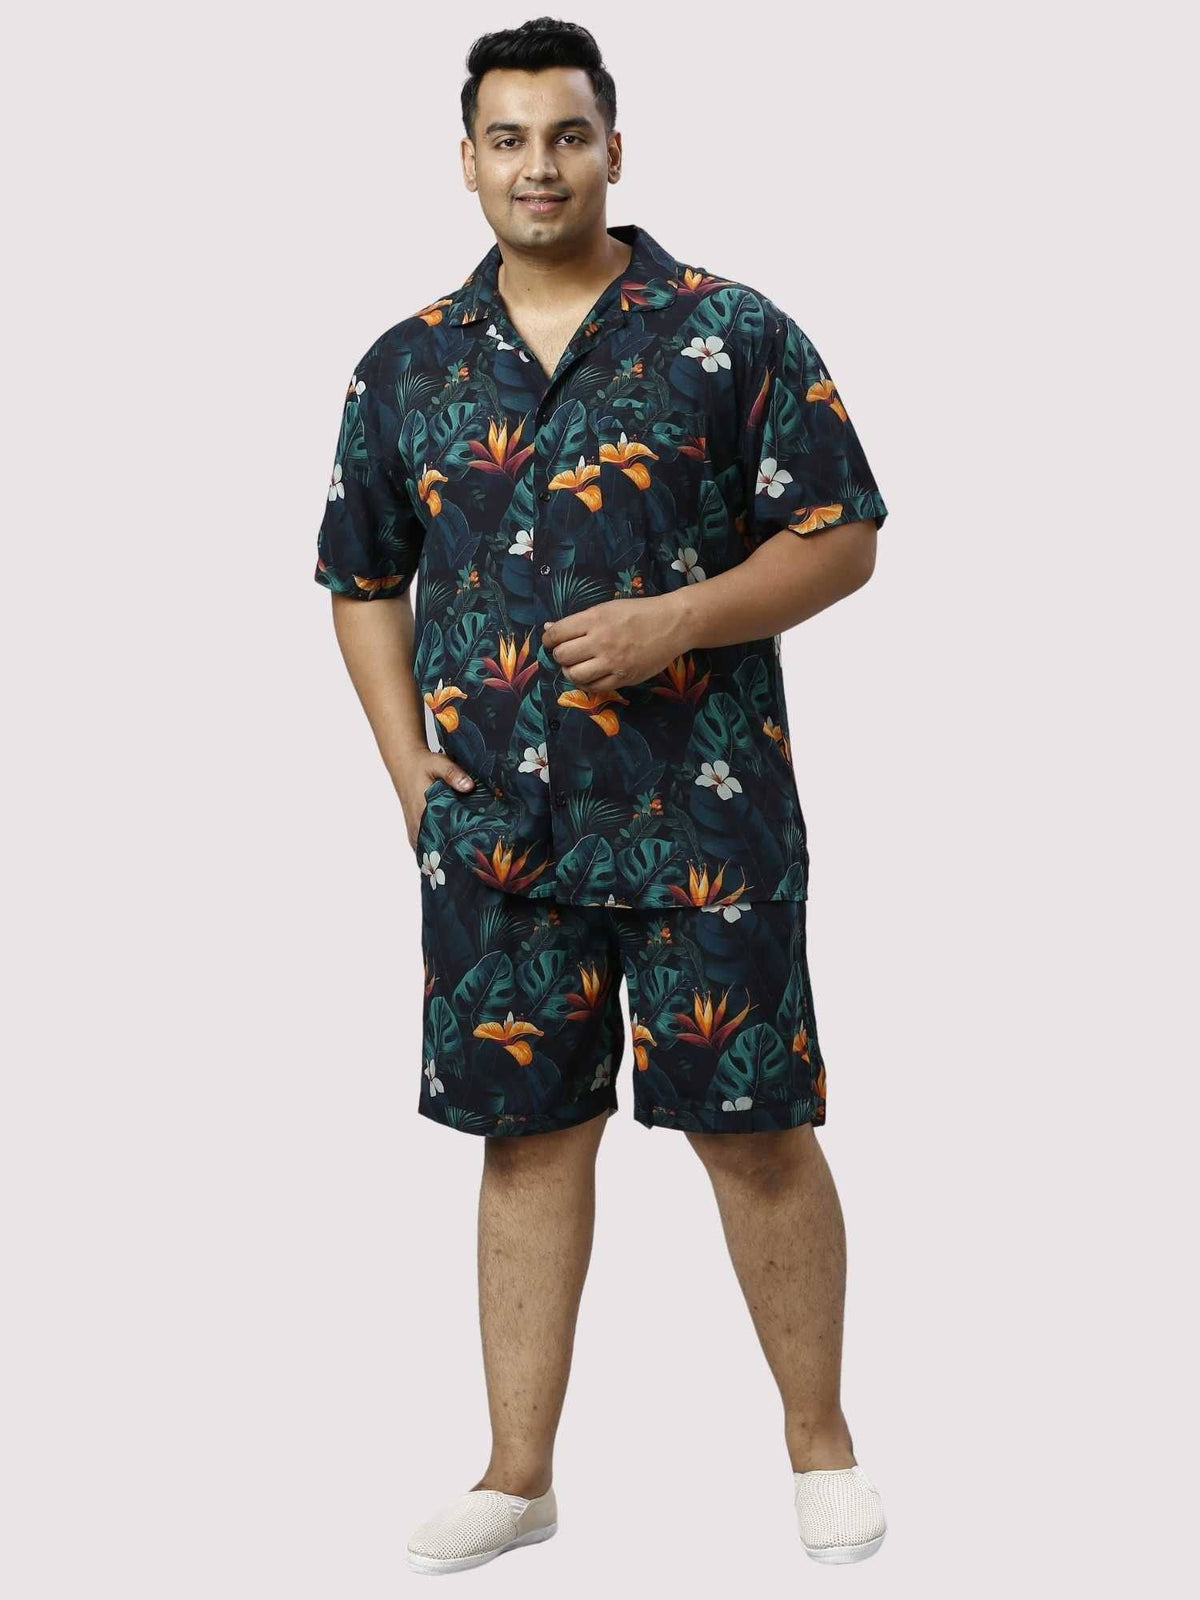 Wild Lush Digital Printed Half Co-ords Set Men's Plus Size - Guniaa Fashions